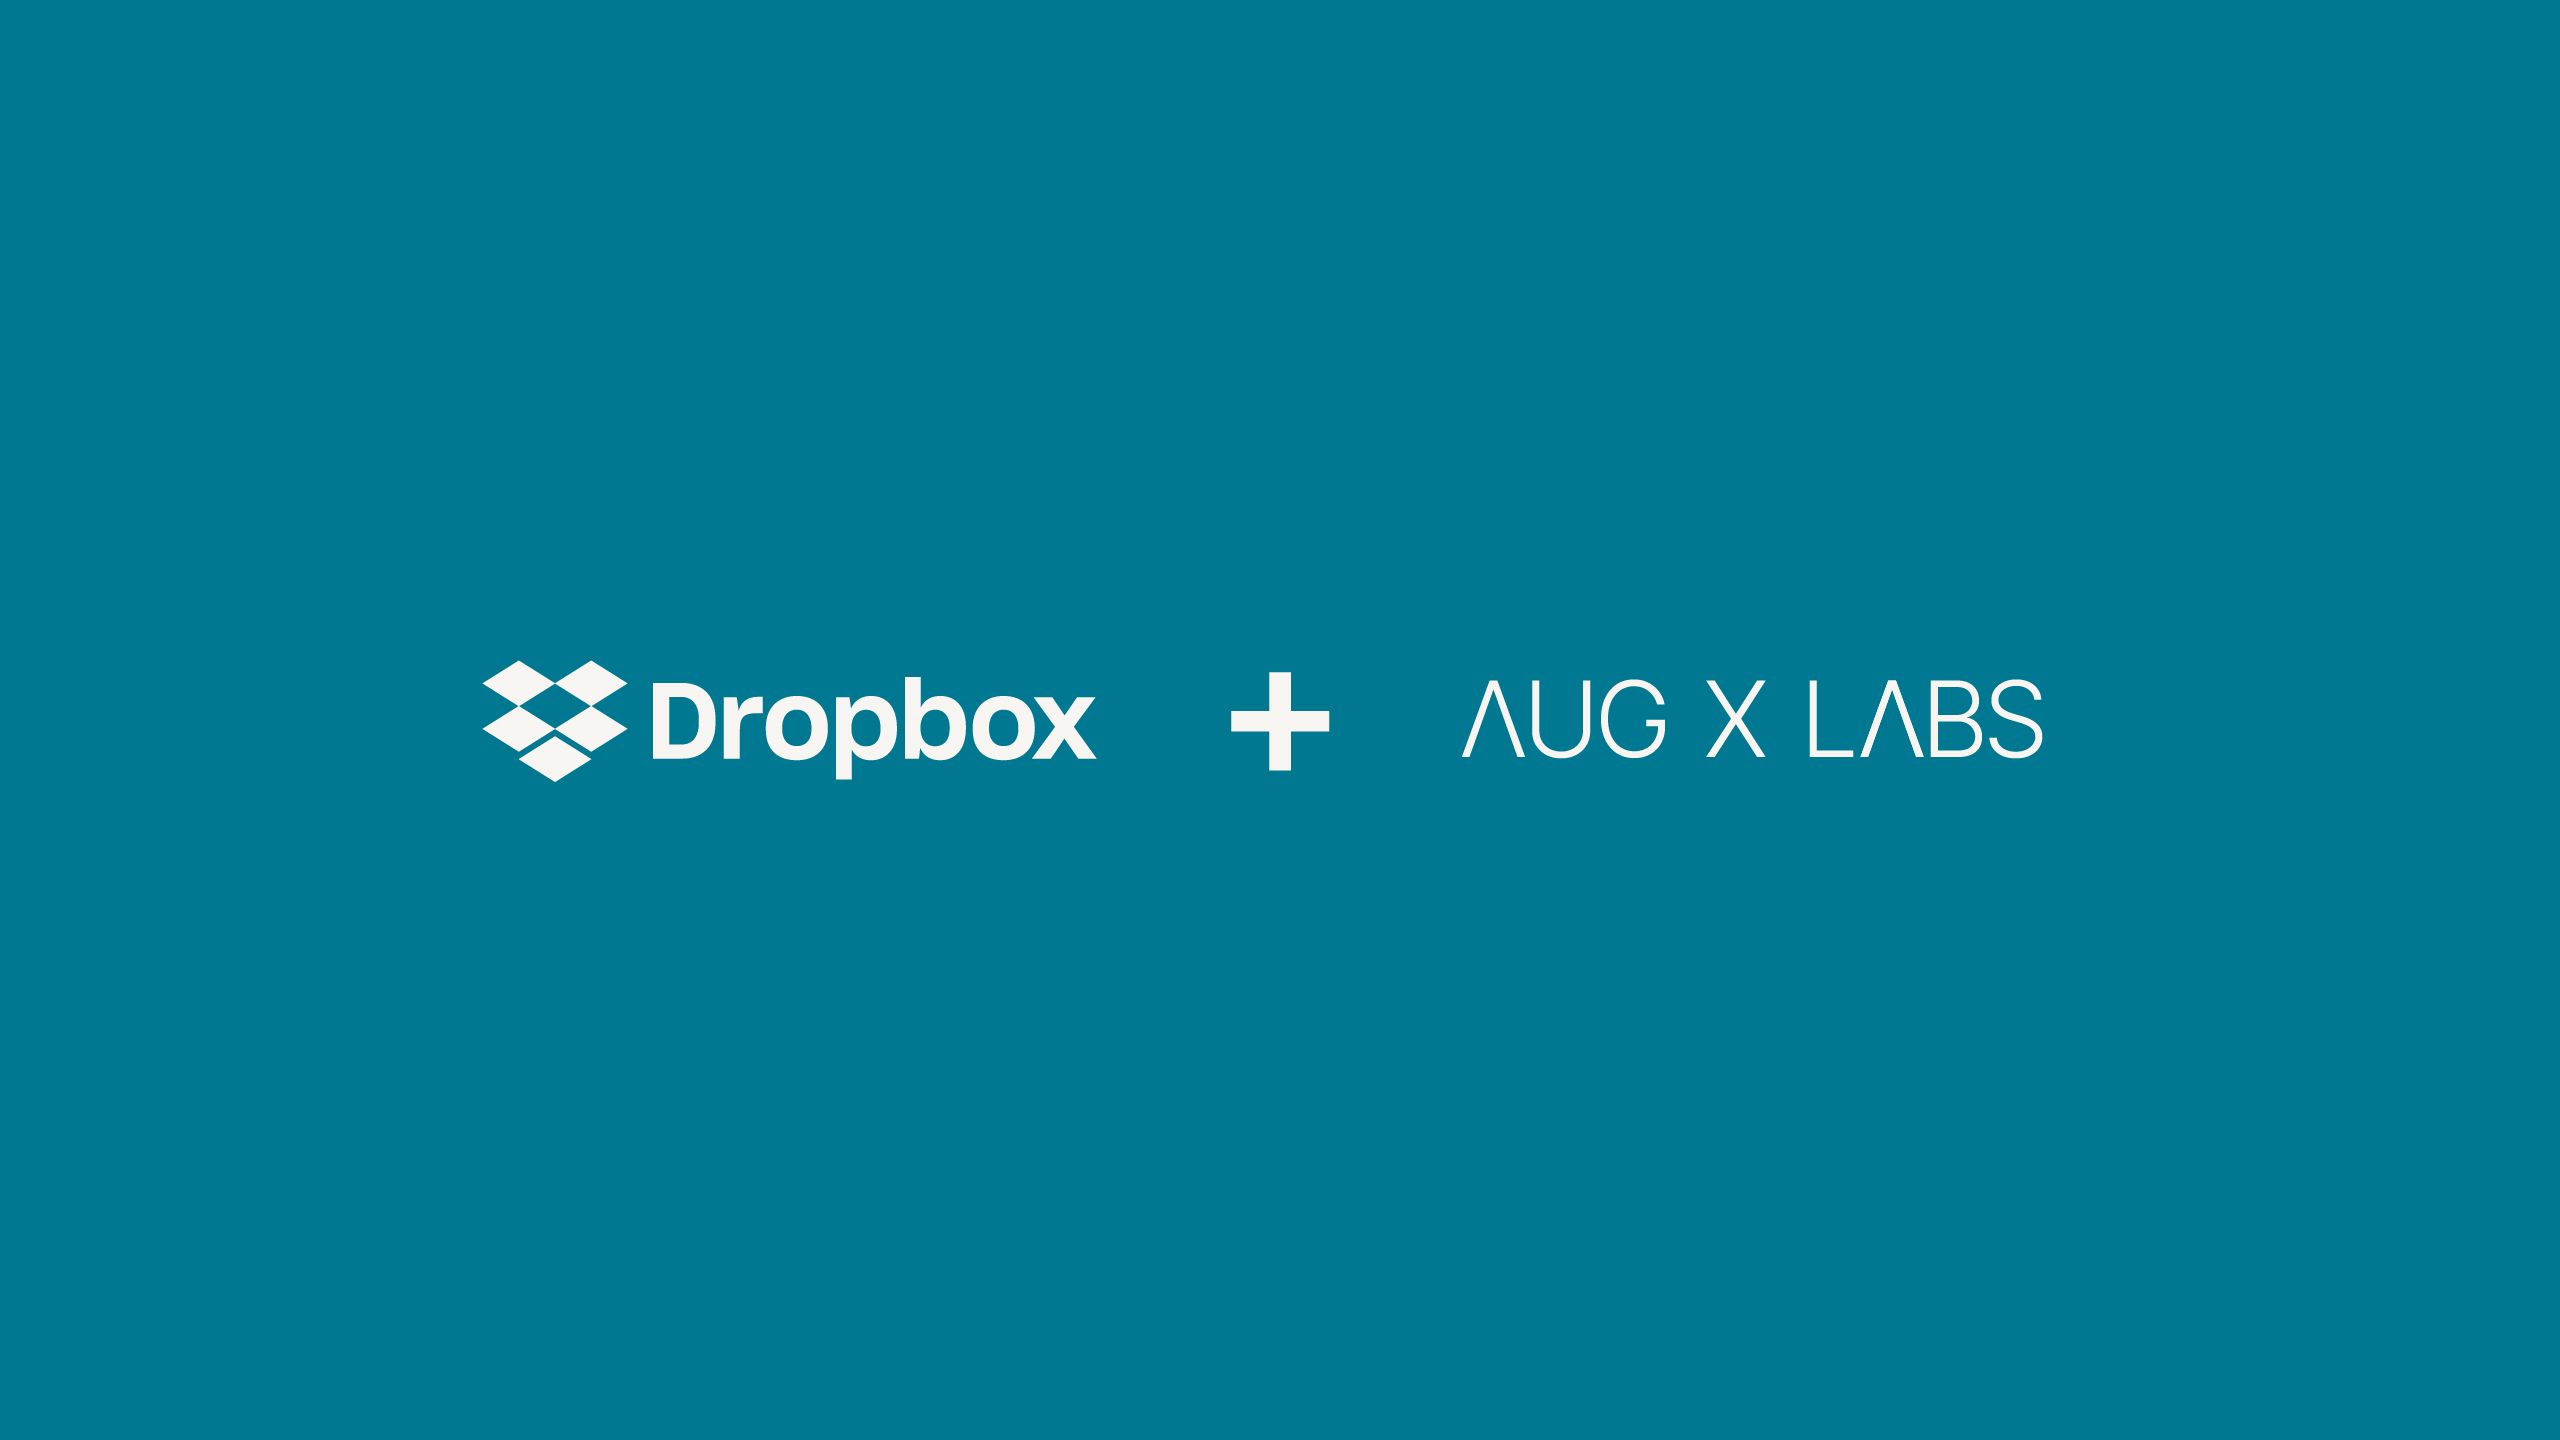 Dropbox and AubX Labs partnership logo  